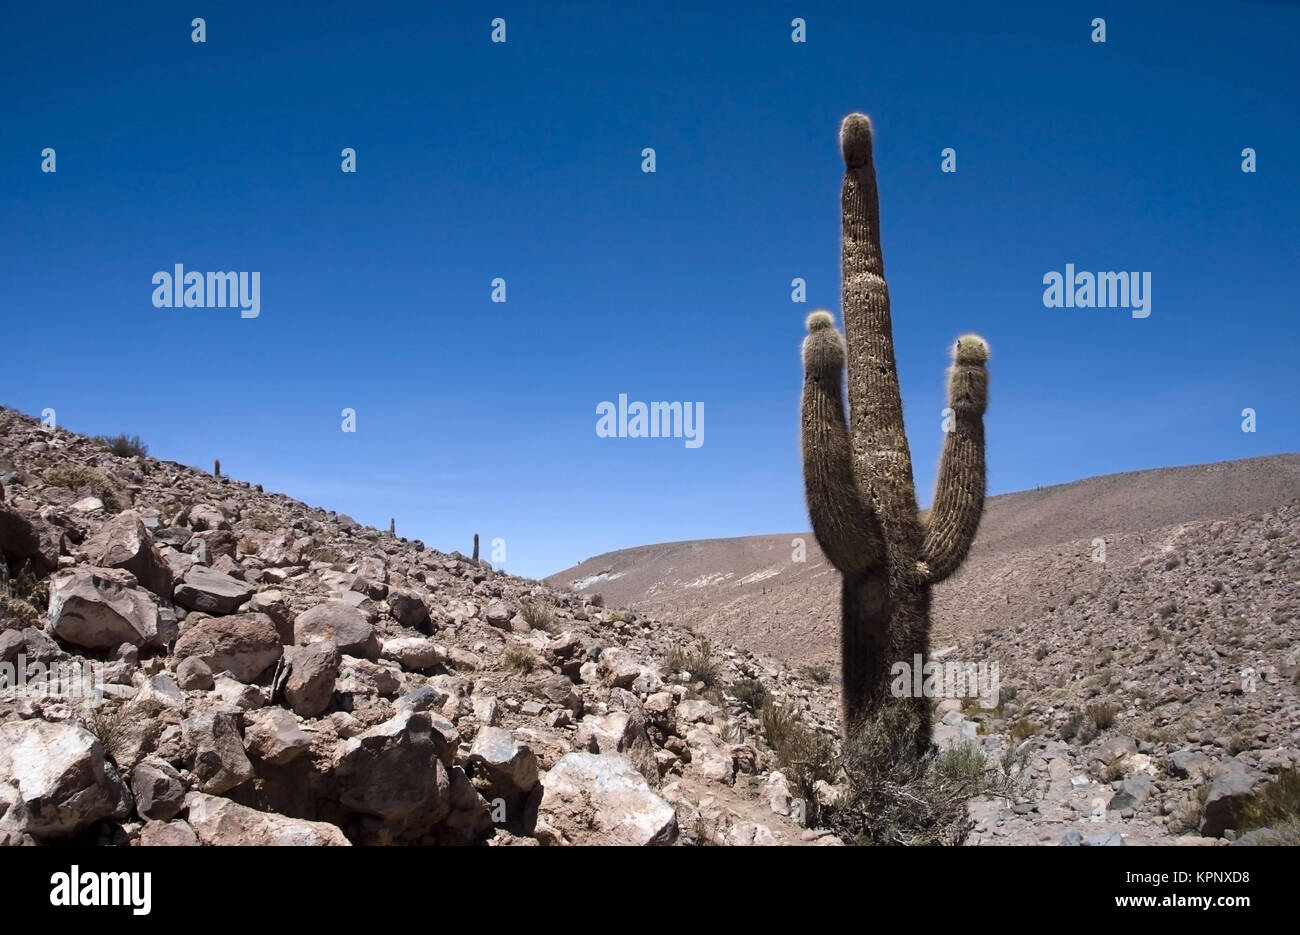 Kakteen in der Atacama-Wueste, Chile, Suedamerika - cactuses in Atacama desert, Chile, South America Stock Photo